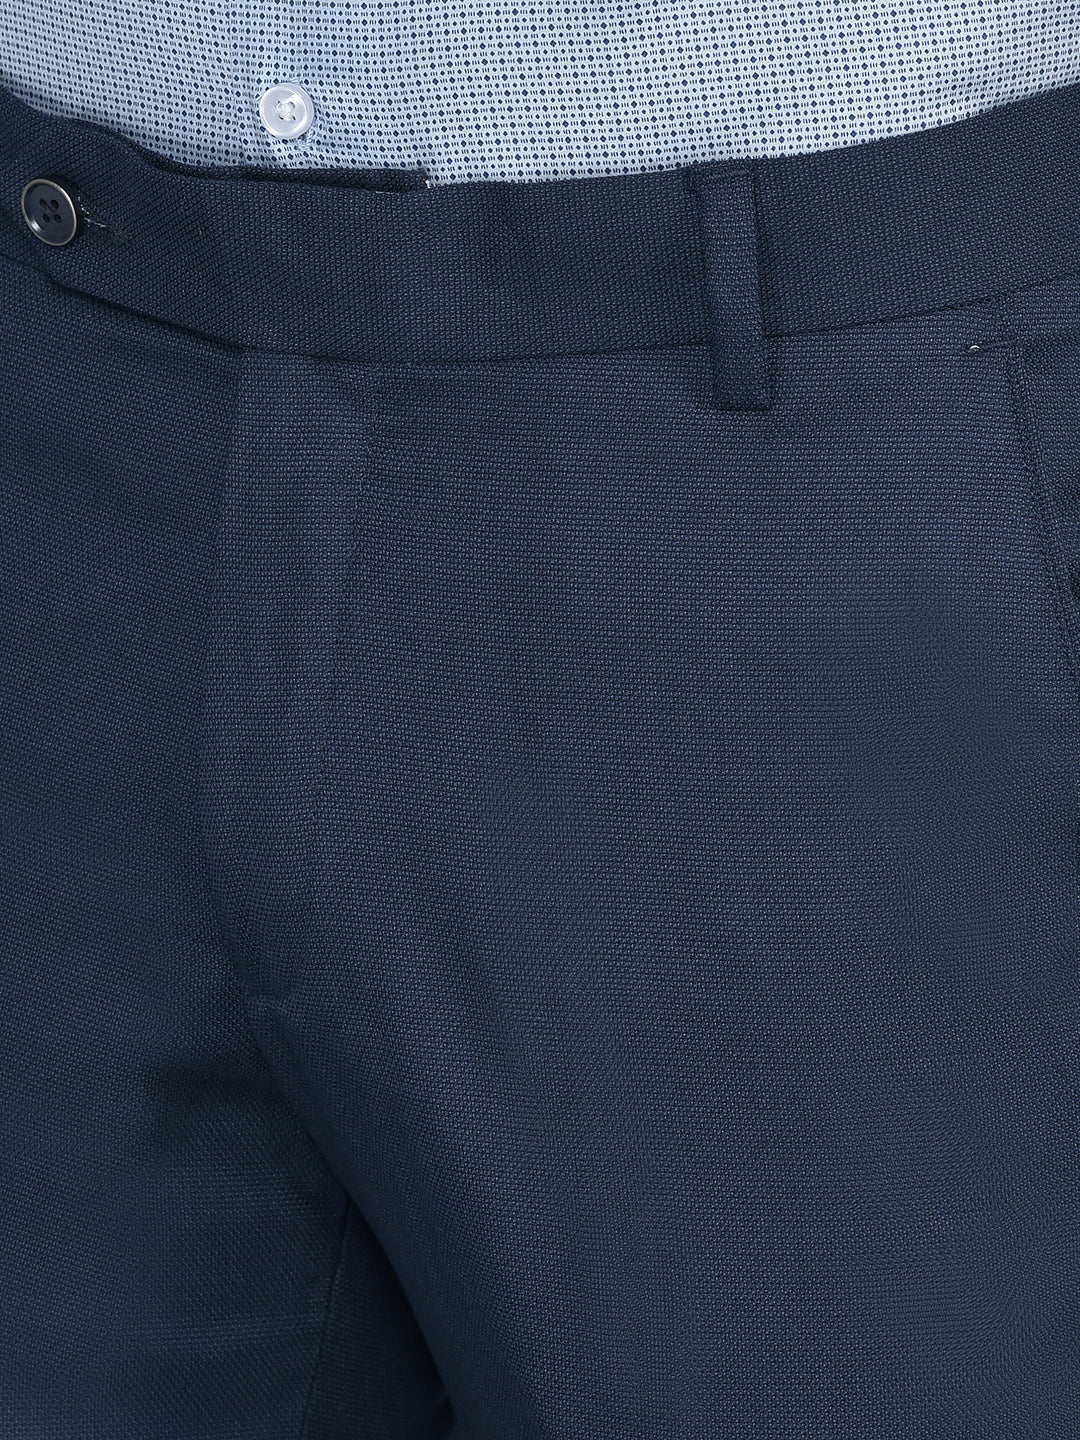 J.Crew: Kenmare Suit Jacket In Italian Cotton Corduroy For Men | Mens  outfits, Suit jacket, Cool suits